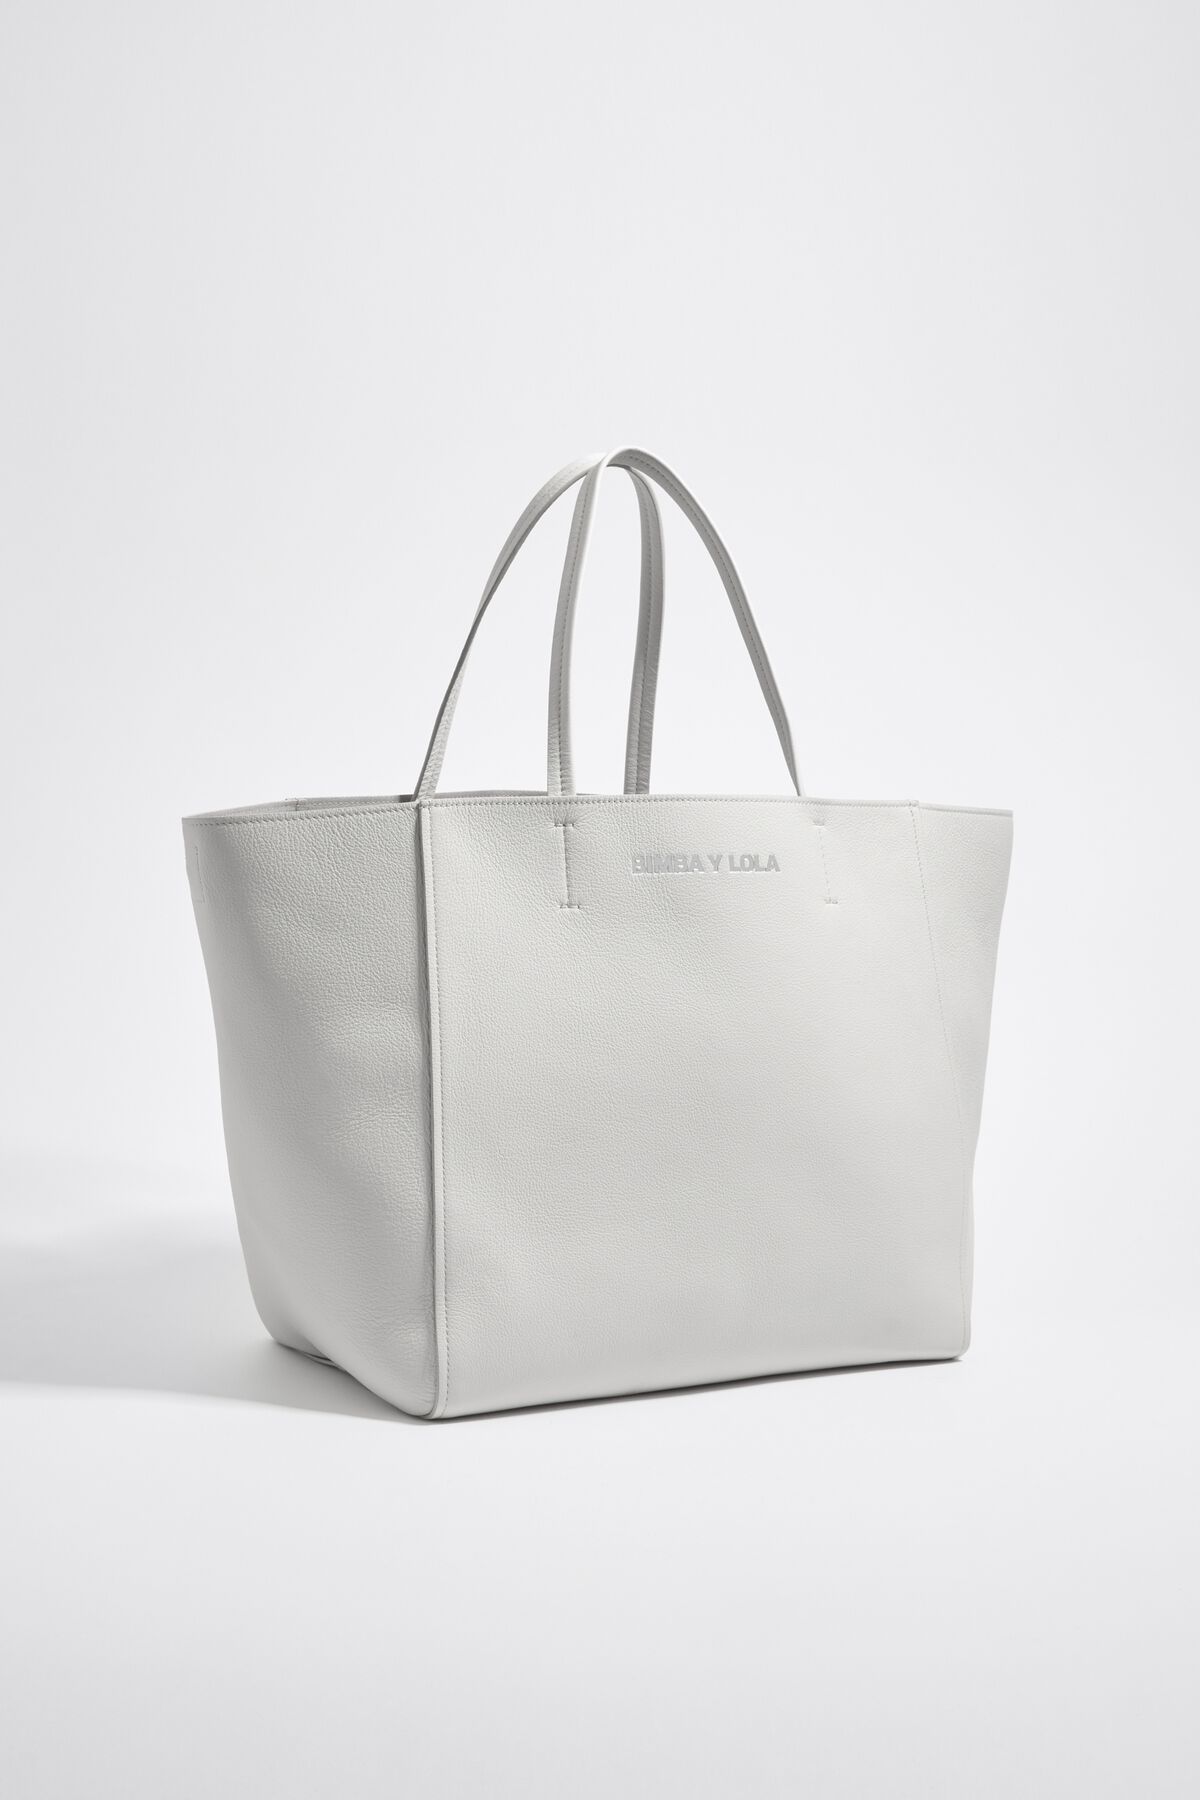 Bimba Y Lola XL Black Nylon Shopper Bag